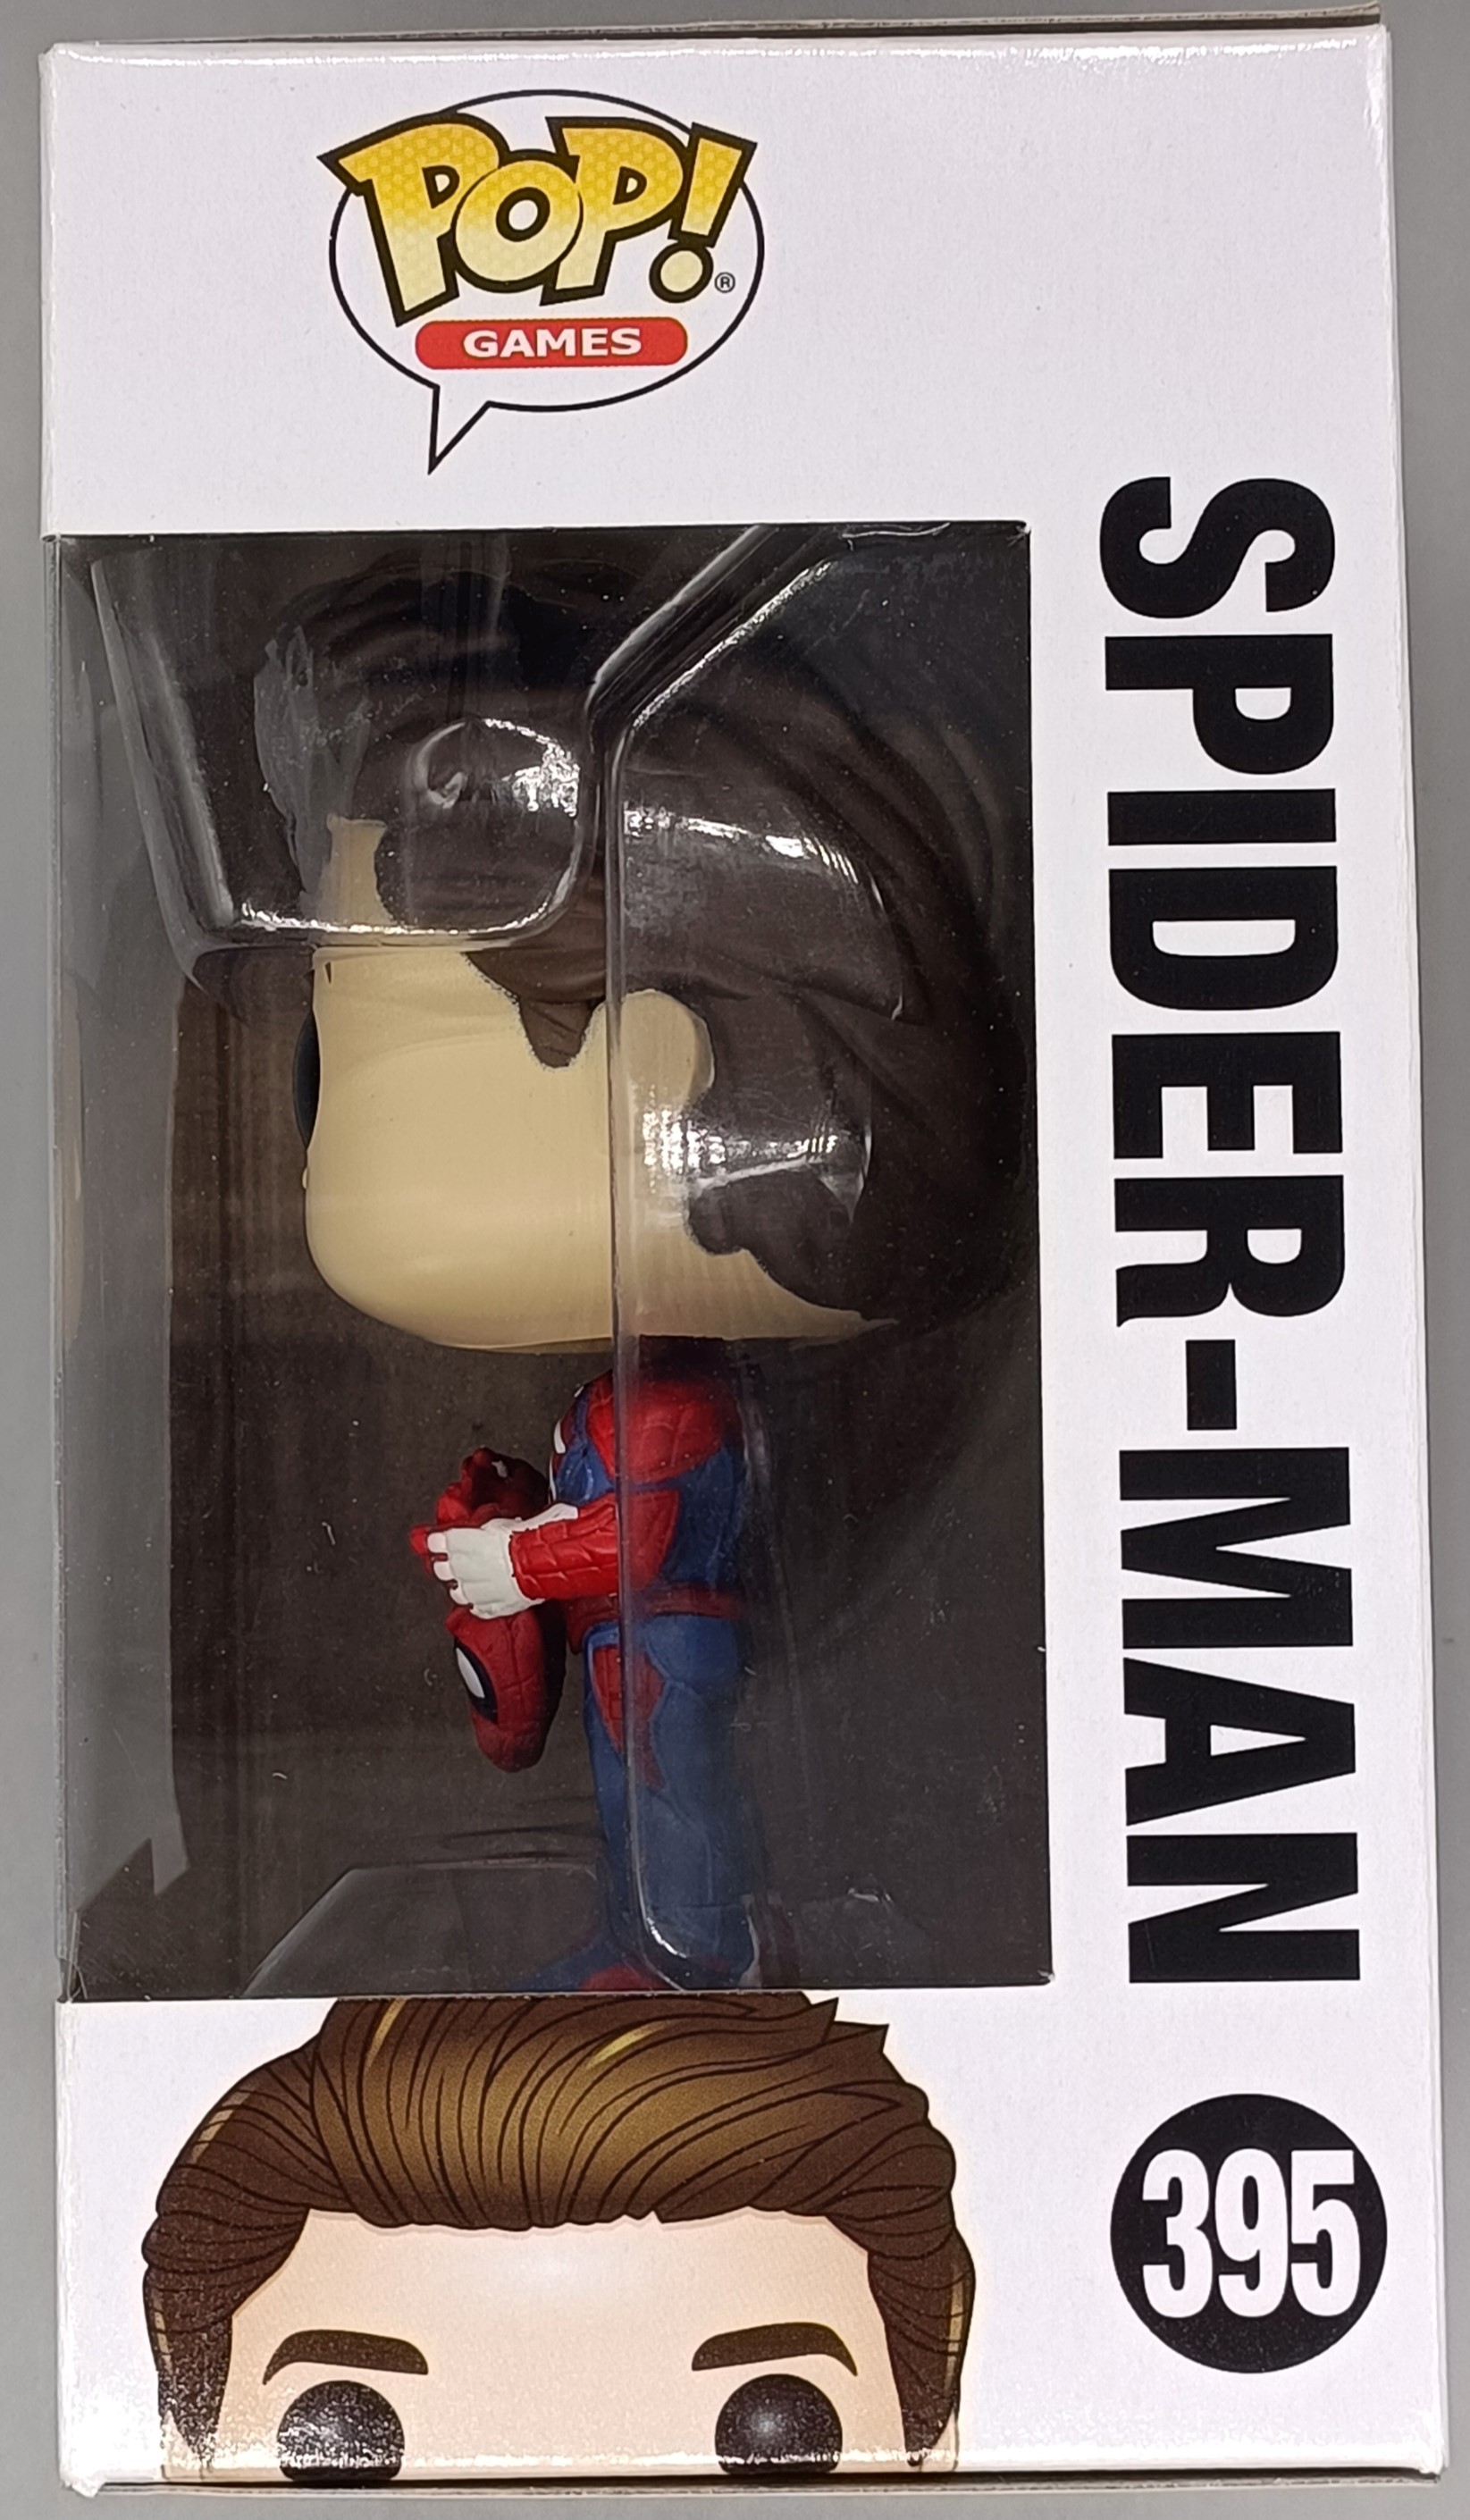 Marvel Pack de 4 POP! Marvel Spider-Man No way Home S3 Figurine 10cm